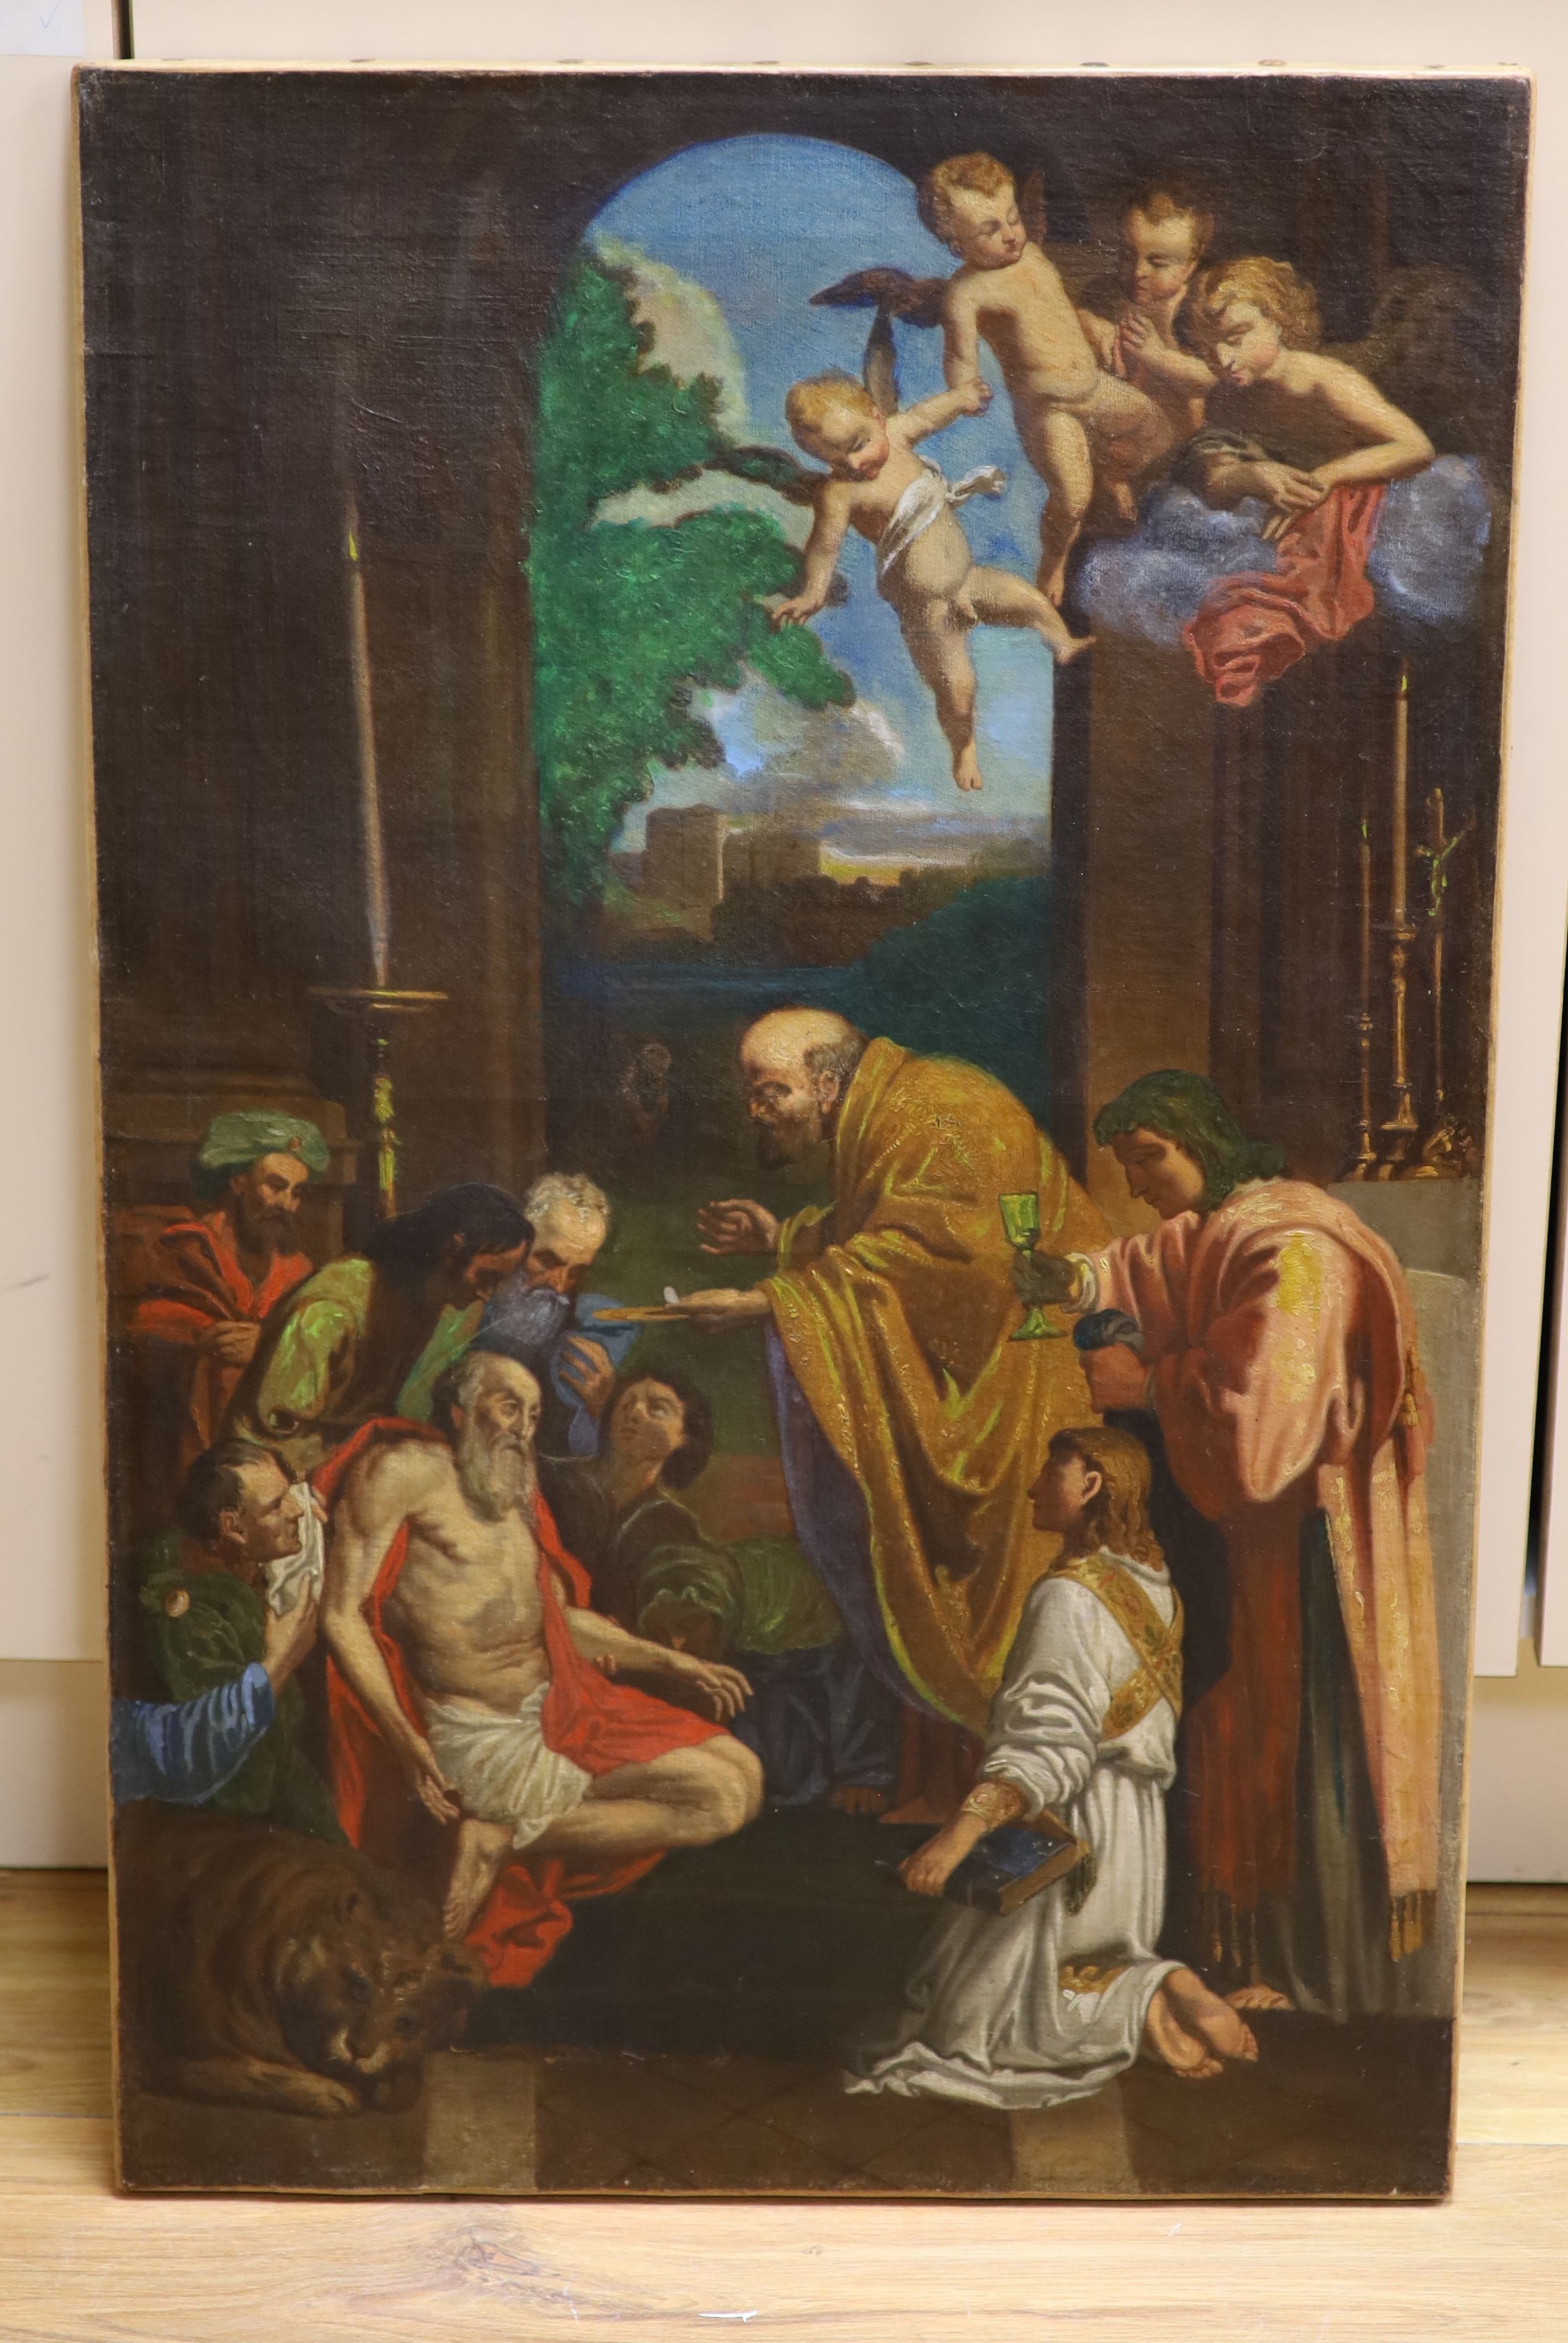 19th century Italian school, after Annibale Carracci, a biblical narrative, 75 x 48 cm, unframed.